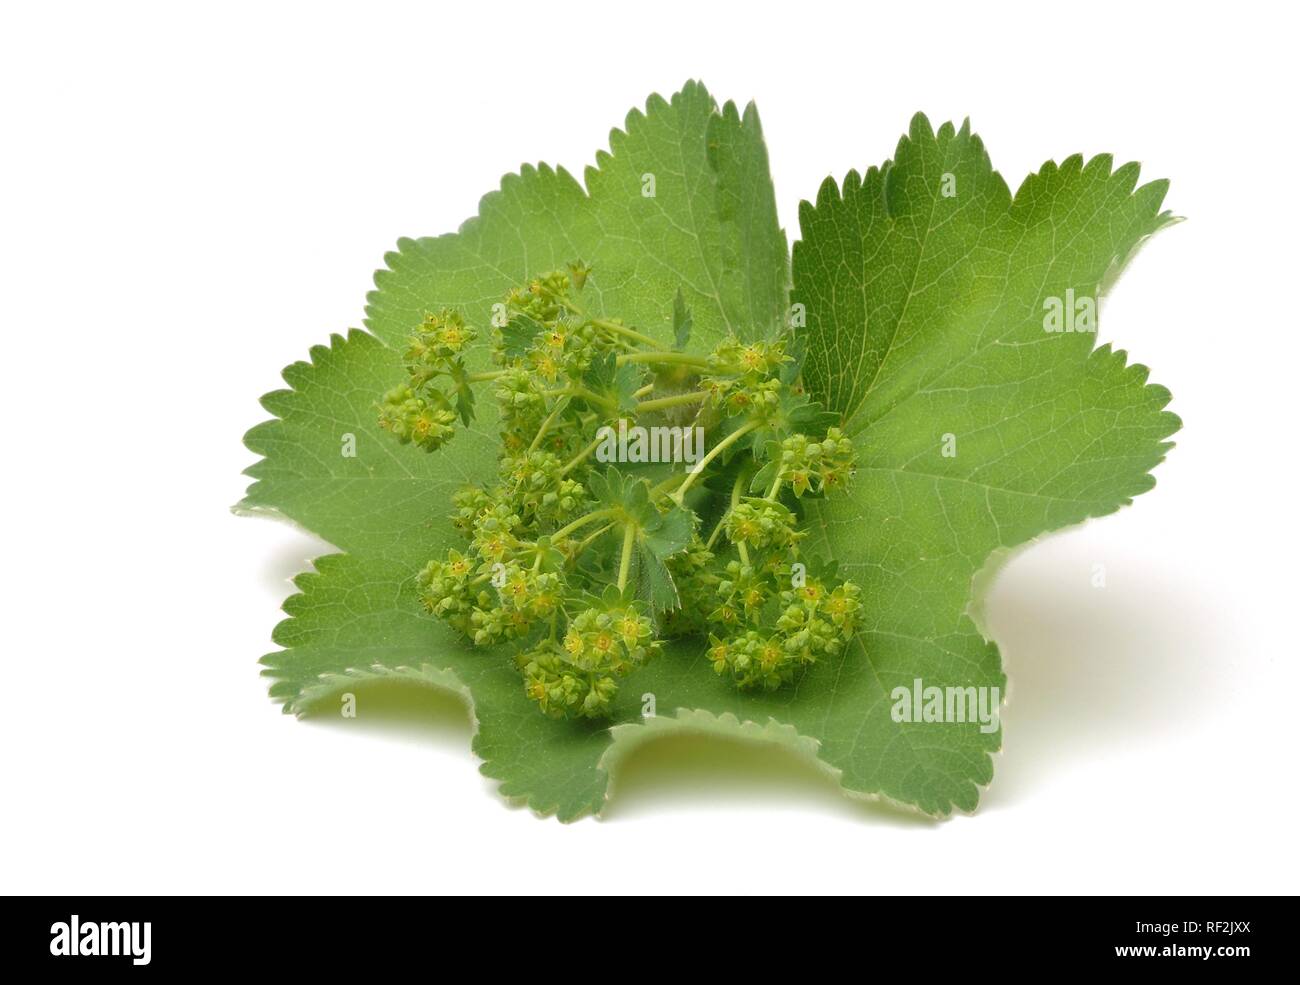 Lady's Mantle (Alchemilla vulgaris), medicinal plant Stock Photo